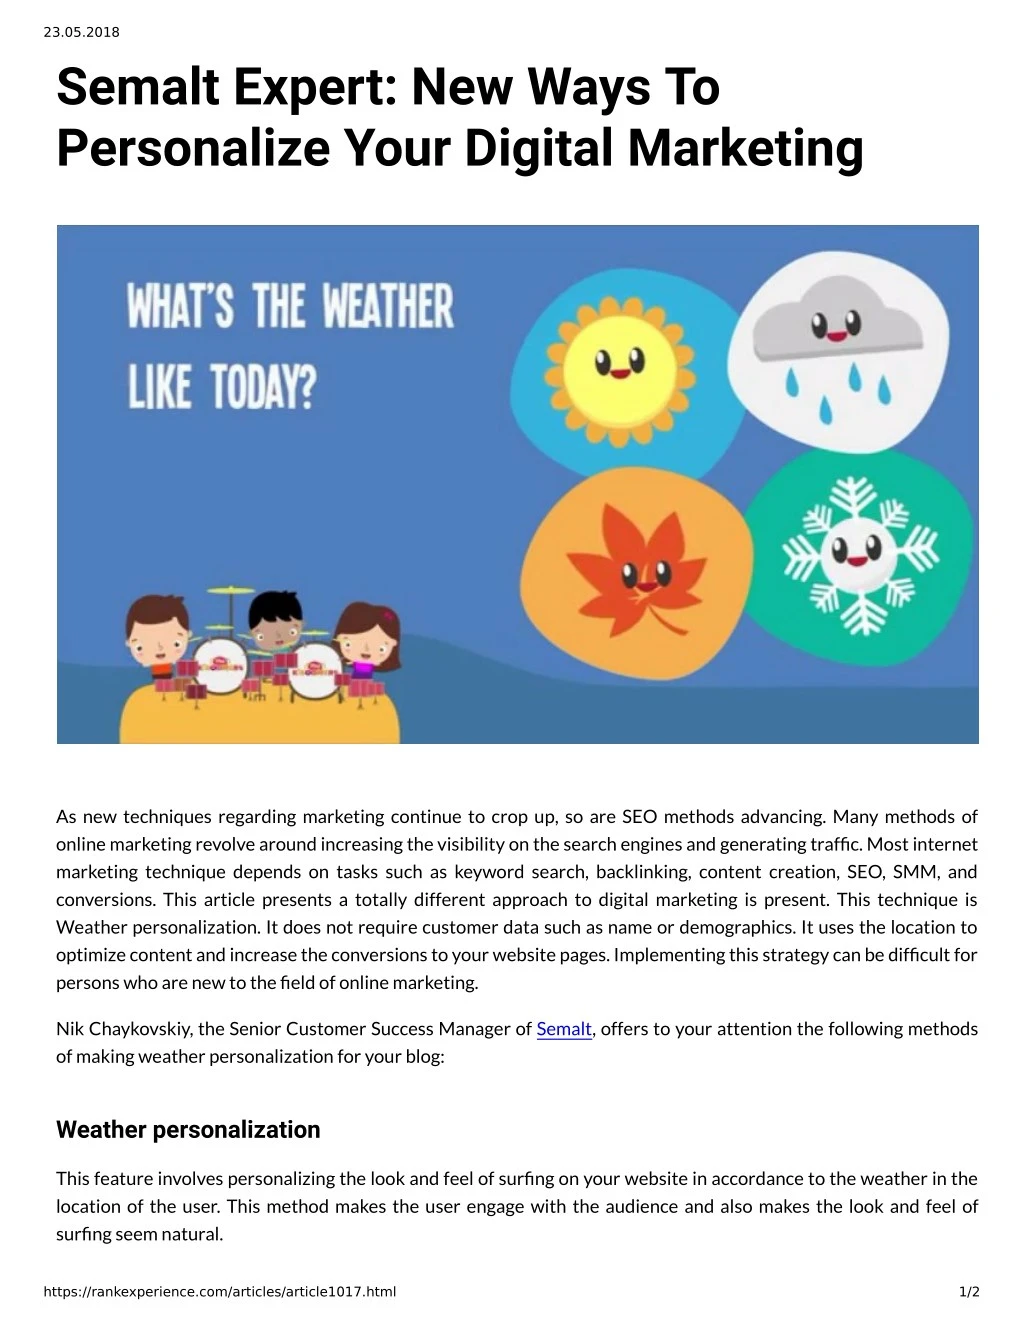 23 05 2018 semalt expert new ways to personalize